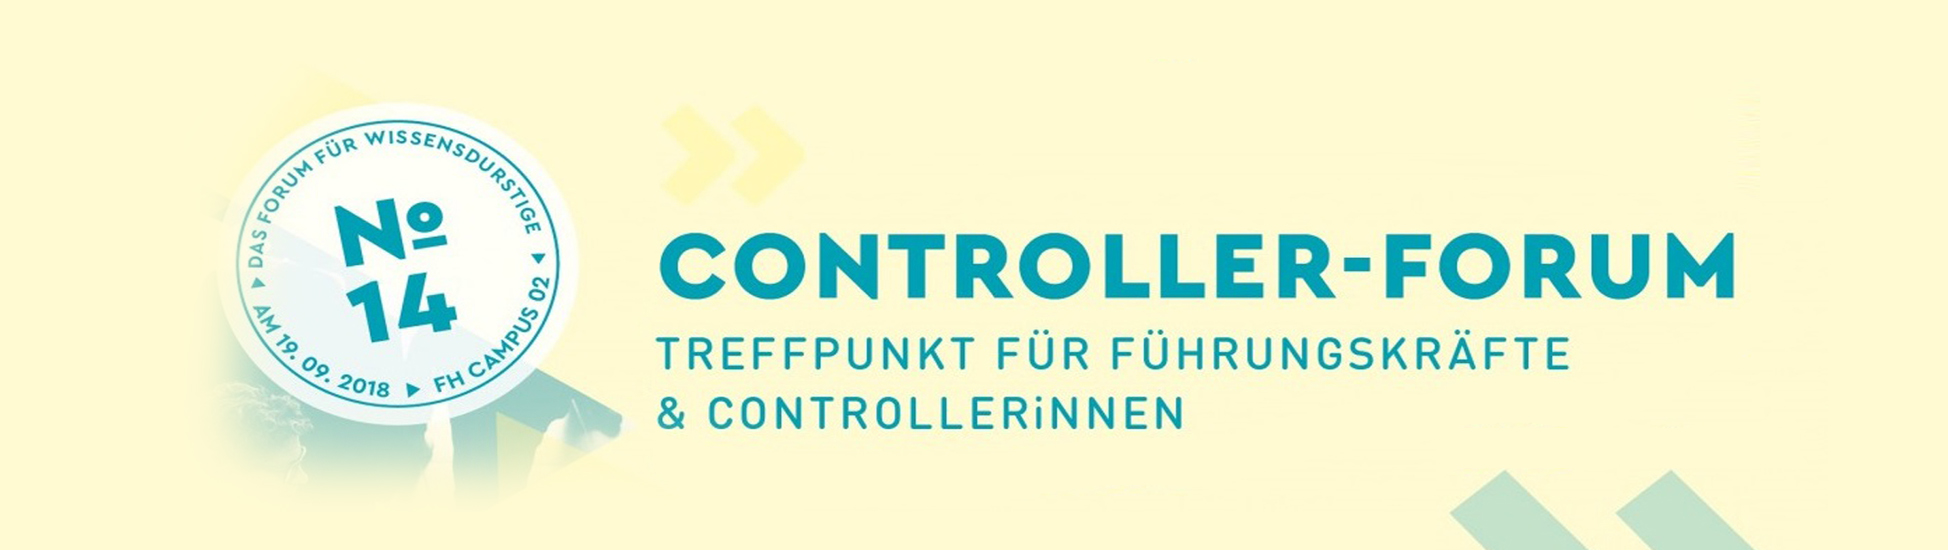 Header_Controller_Forum_2